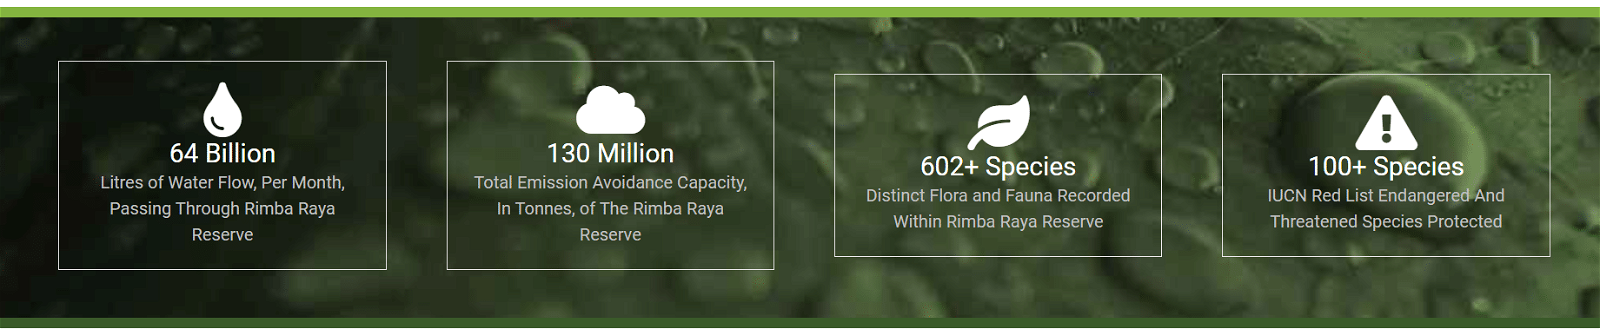 Rimba Raya REDD+ project infographic